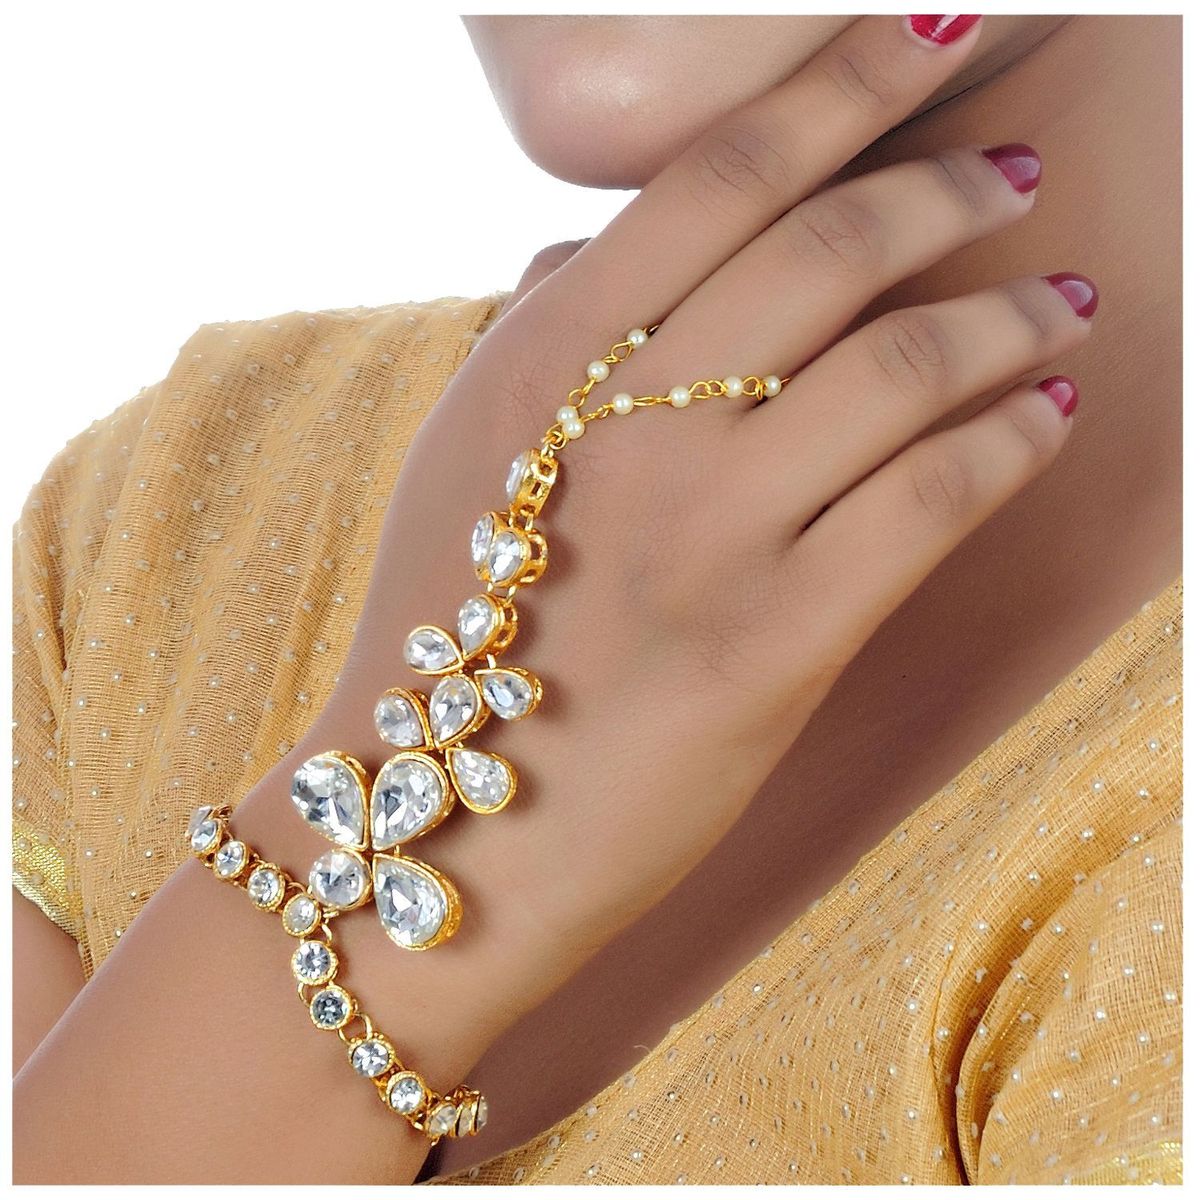 Fashion 925 Sterling Silver Hello Kitty Bracelet Hand Chain Girl's Jewelry  Gift | eBay